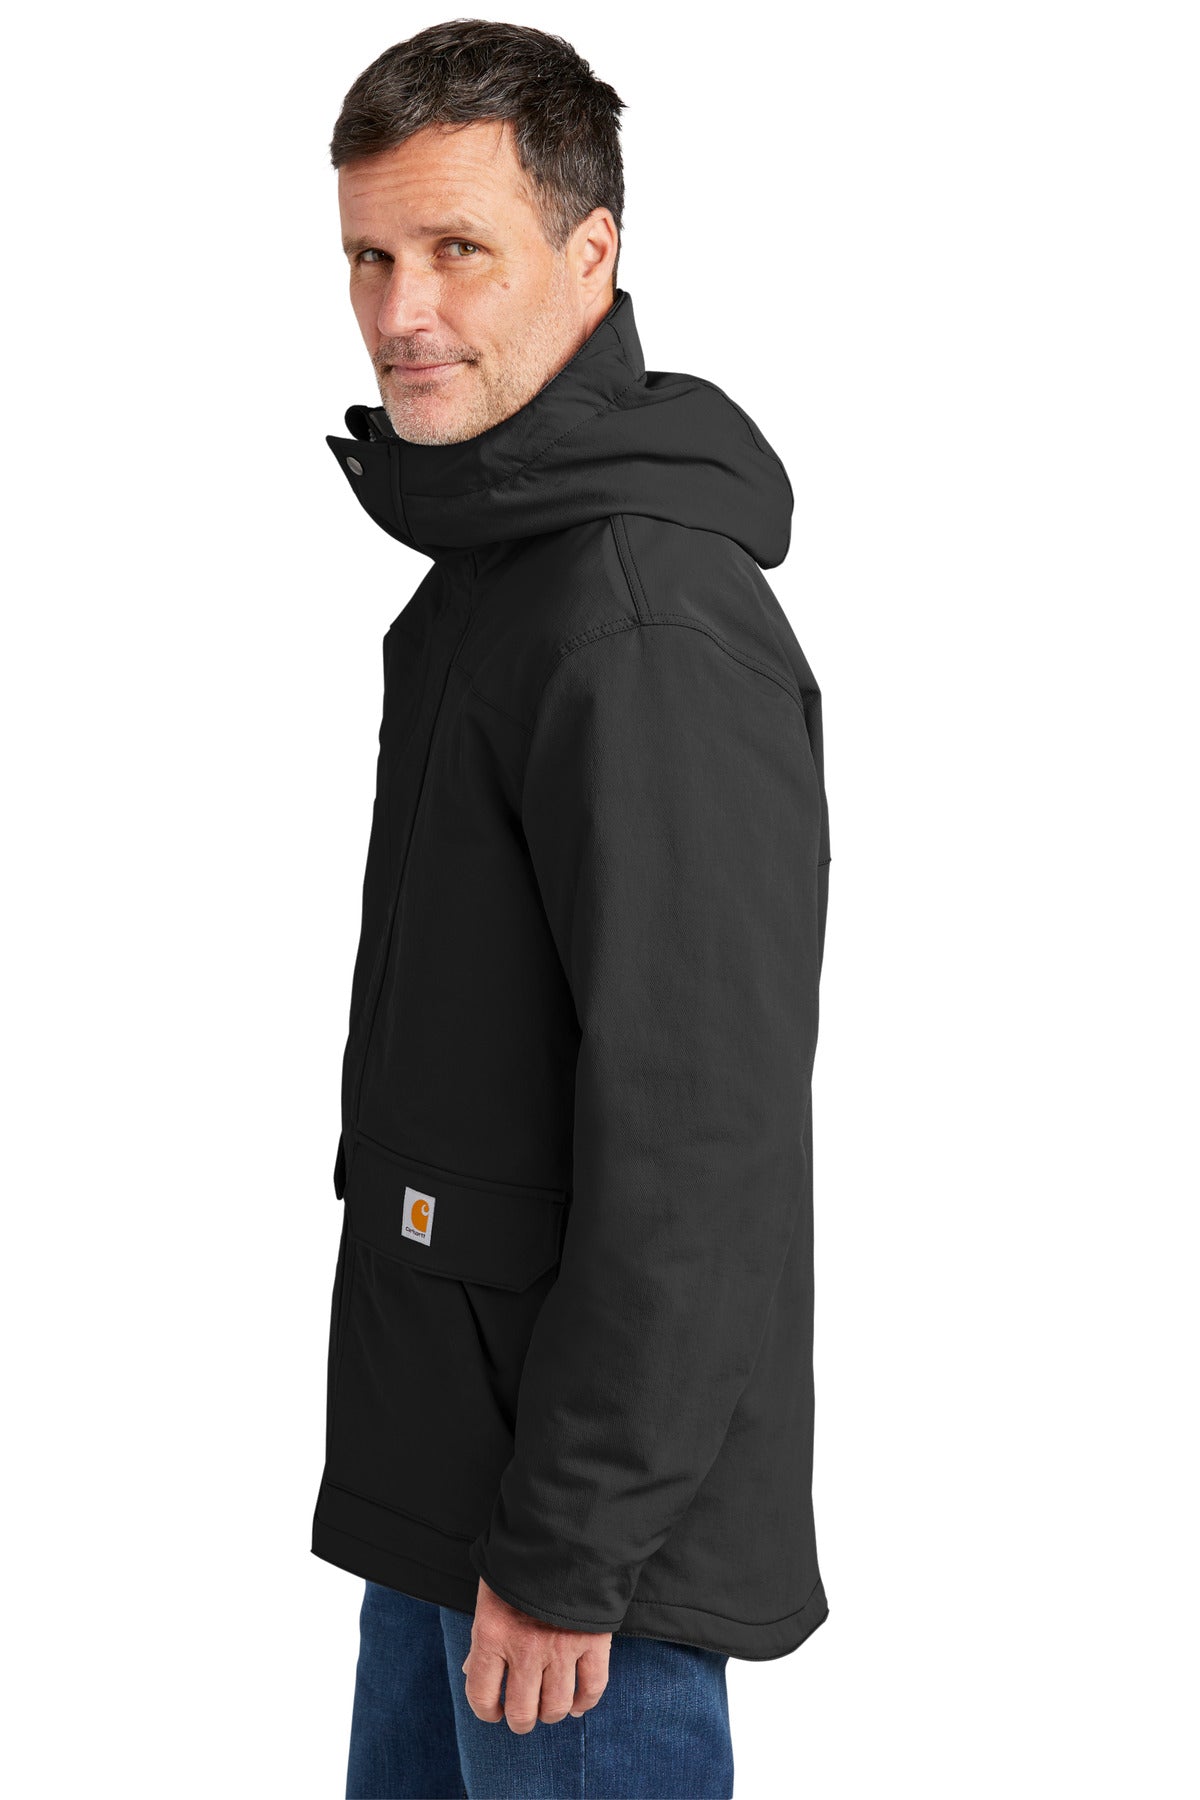 Carhartt Super Dux Insulated Hooded Coat CT105533